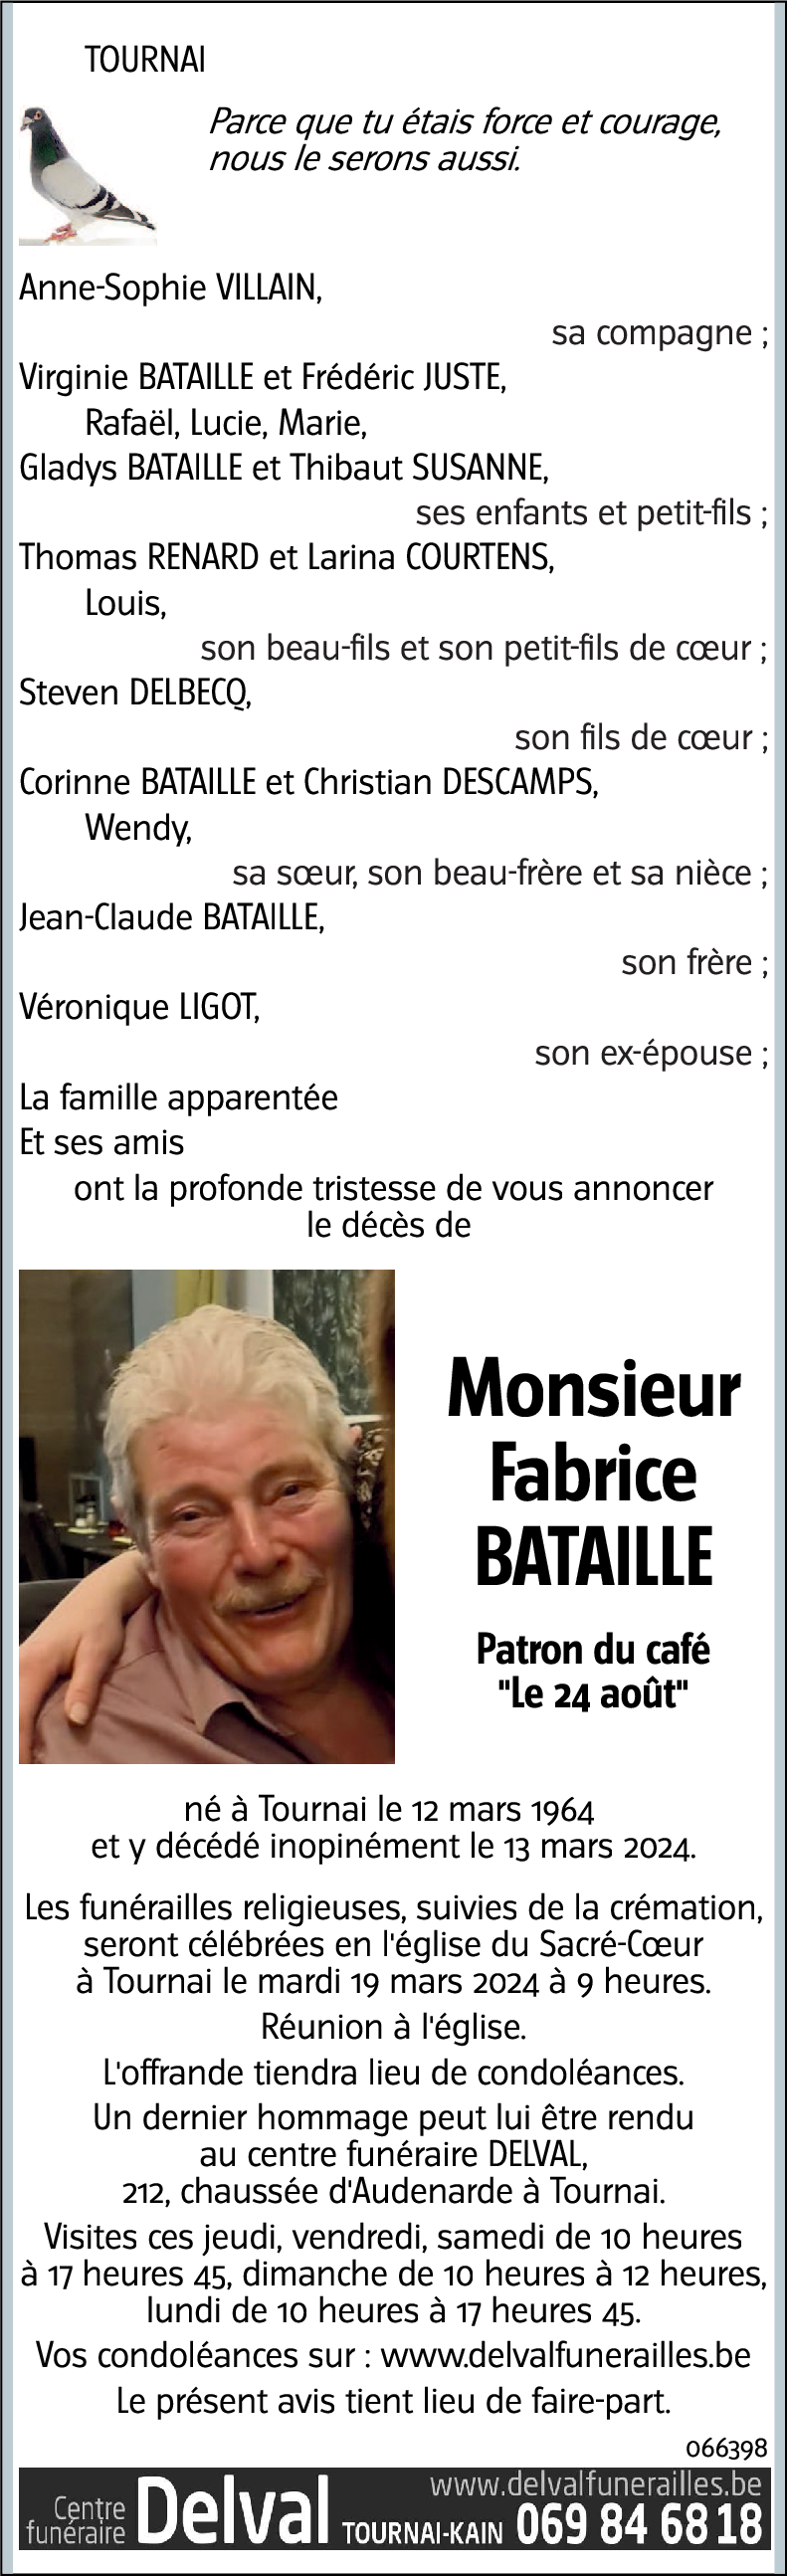 Fabrice BATAILLE